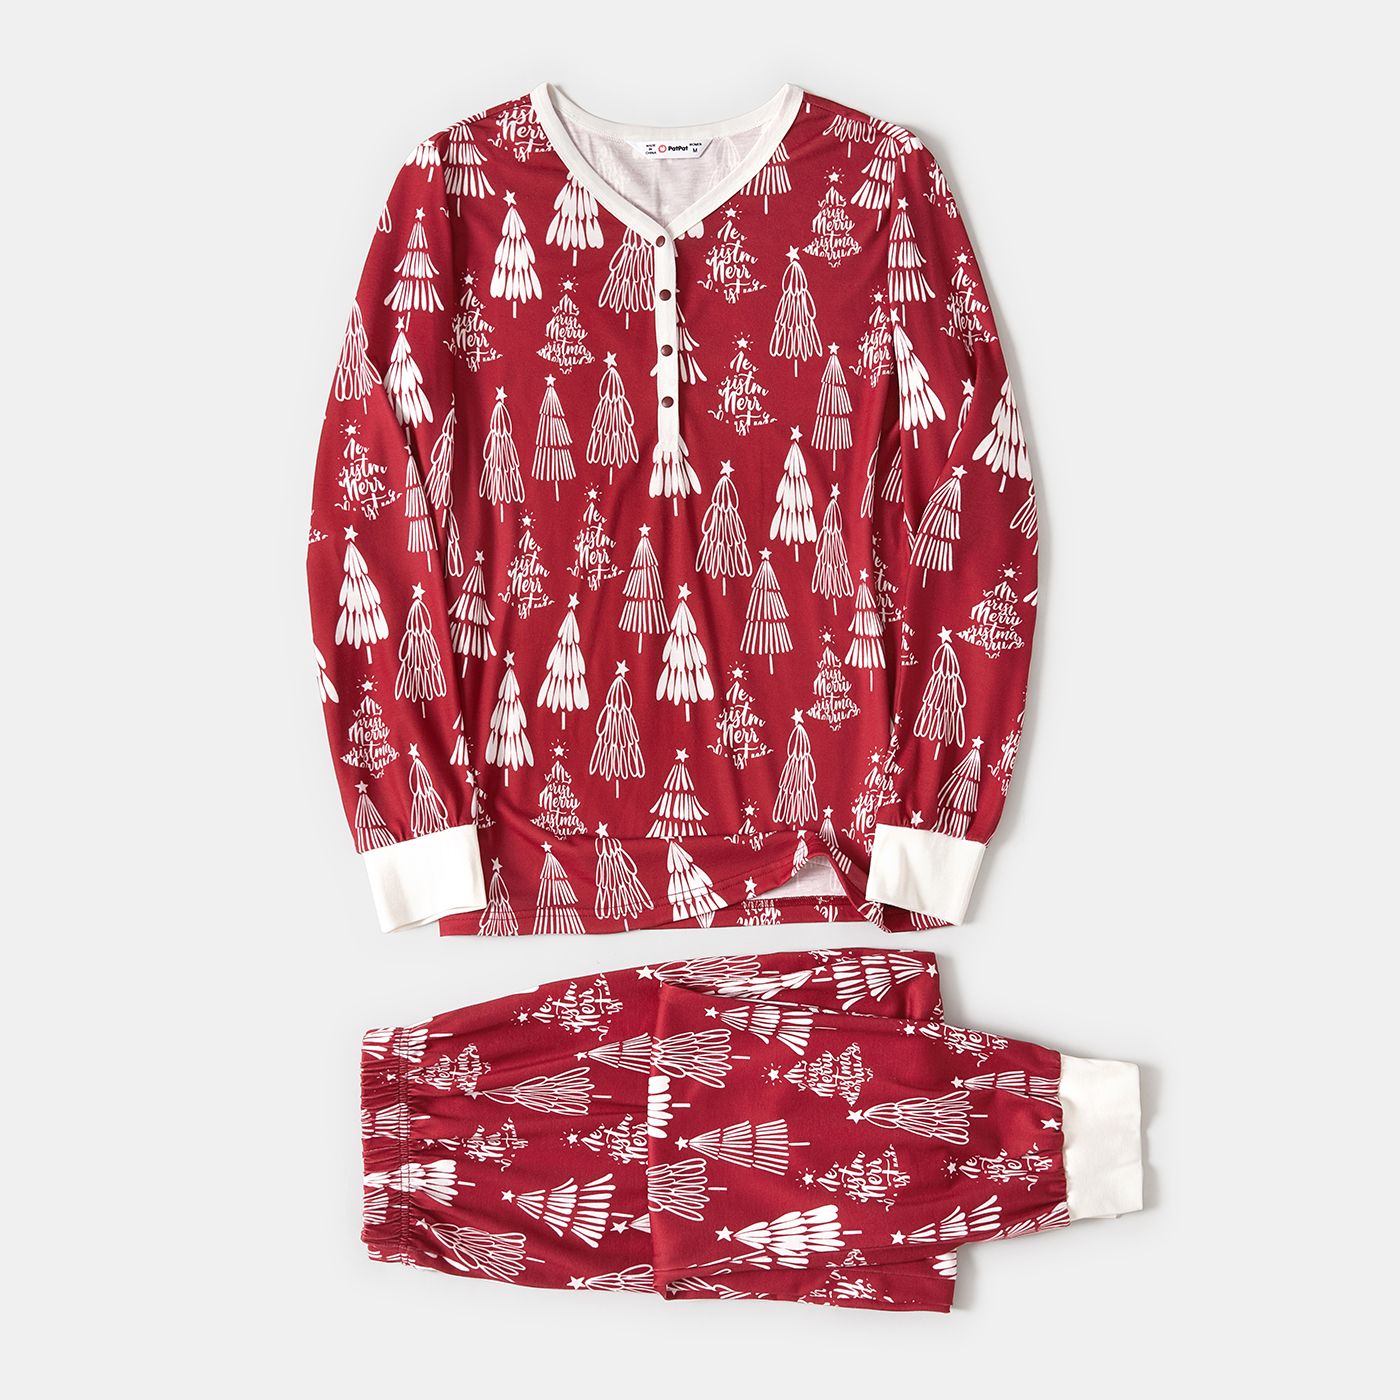 Christmas Family Matching Allover Xmas Tree Print Long-sleeve Pajamas Sets (Flame Resistant)